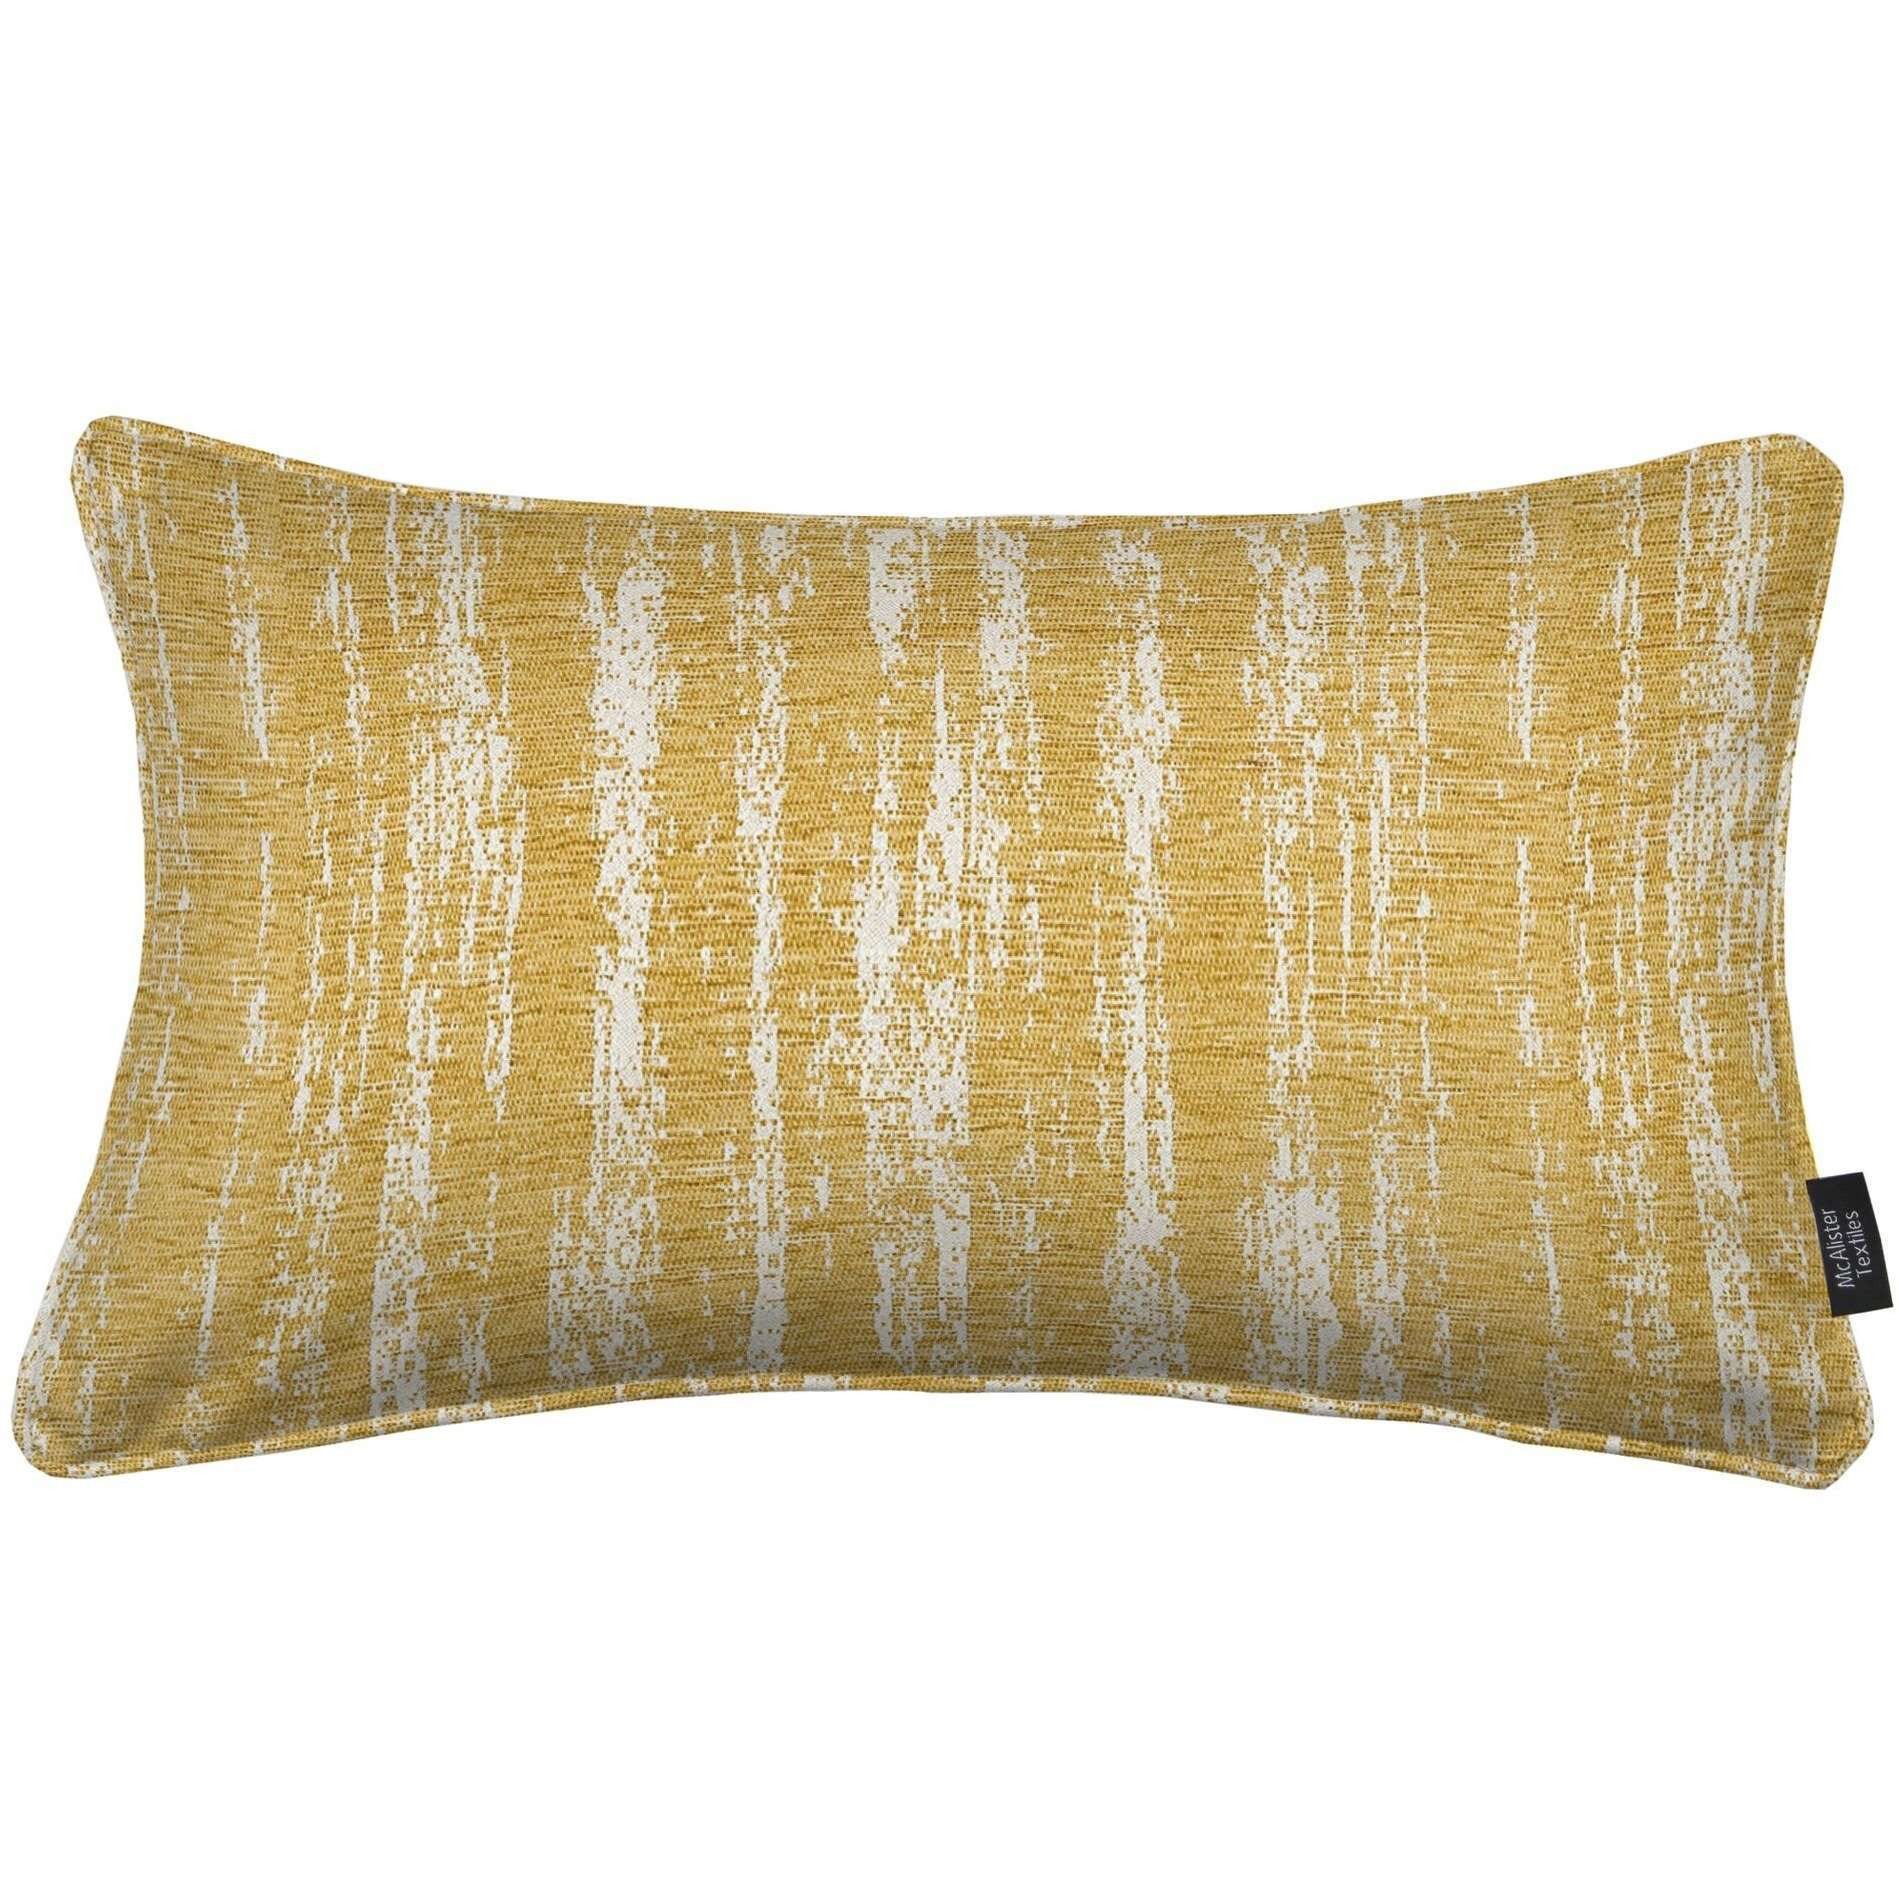 Textured Chenille Mustard Yellow Pillow, Polyester Filler / 60cm x 40cm